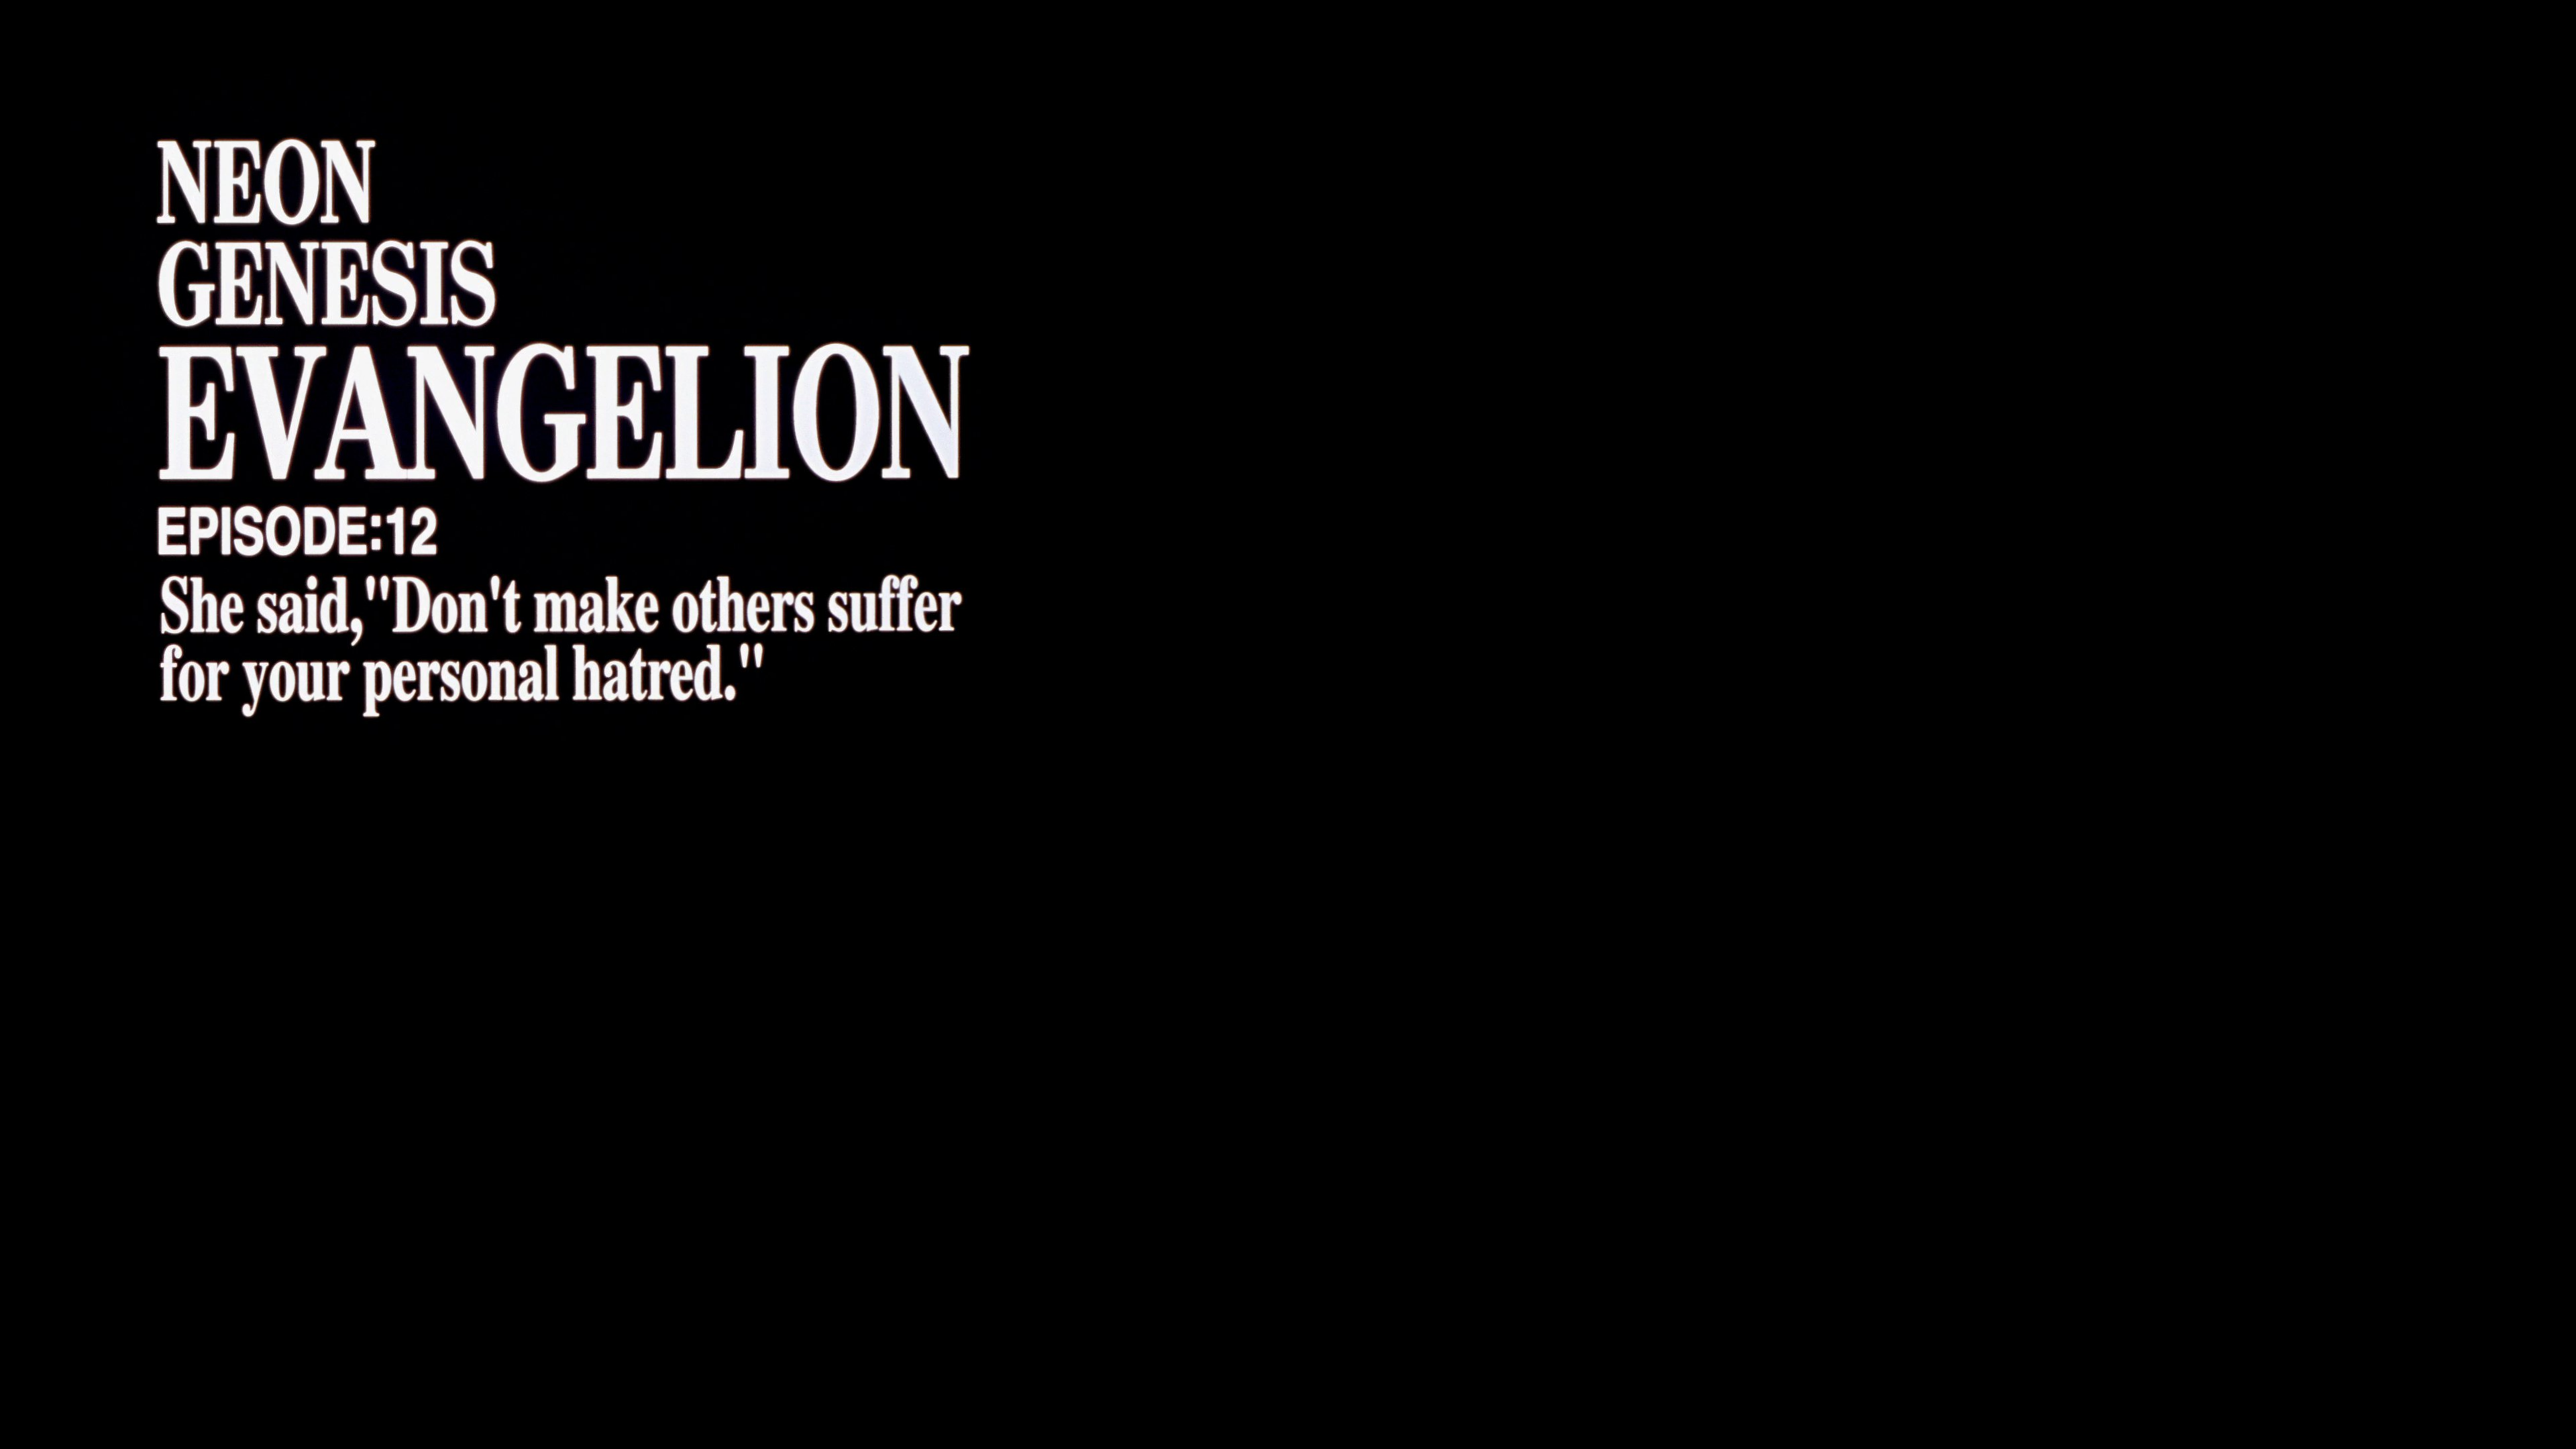 Neon Genesis Evangelion Anime Anime Screenshot Black Background Simple Background Text White Text Mi 3840x2160